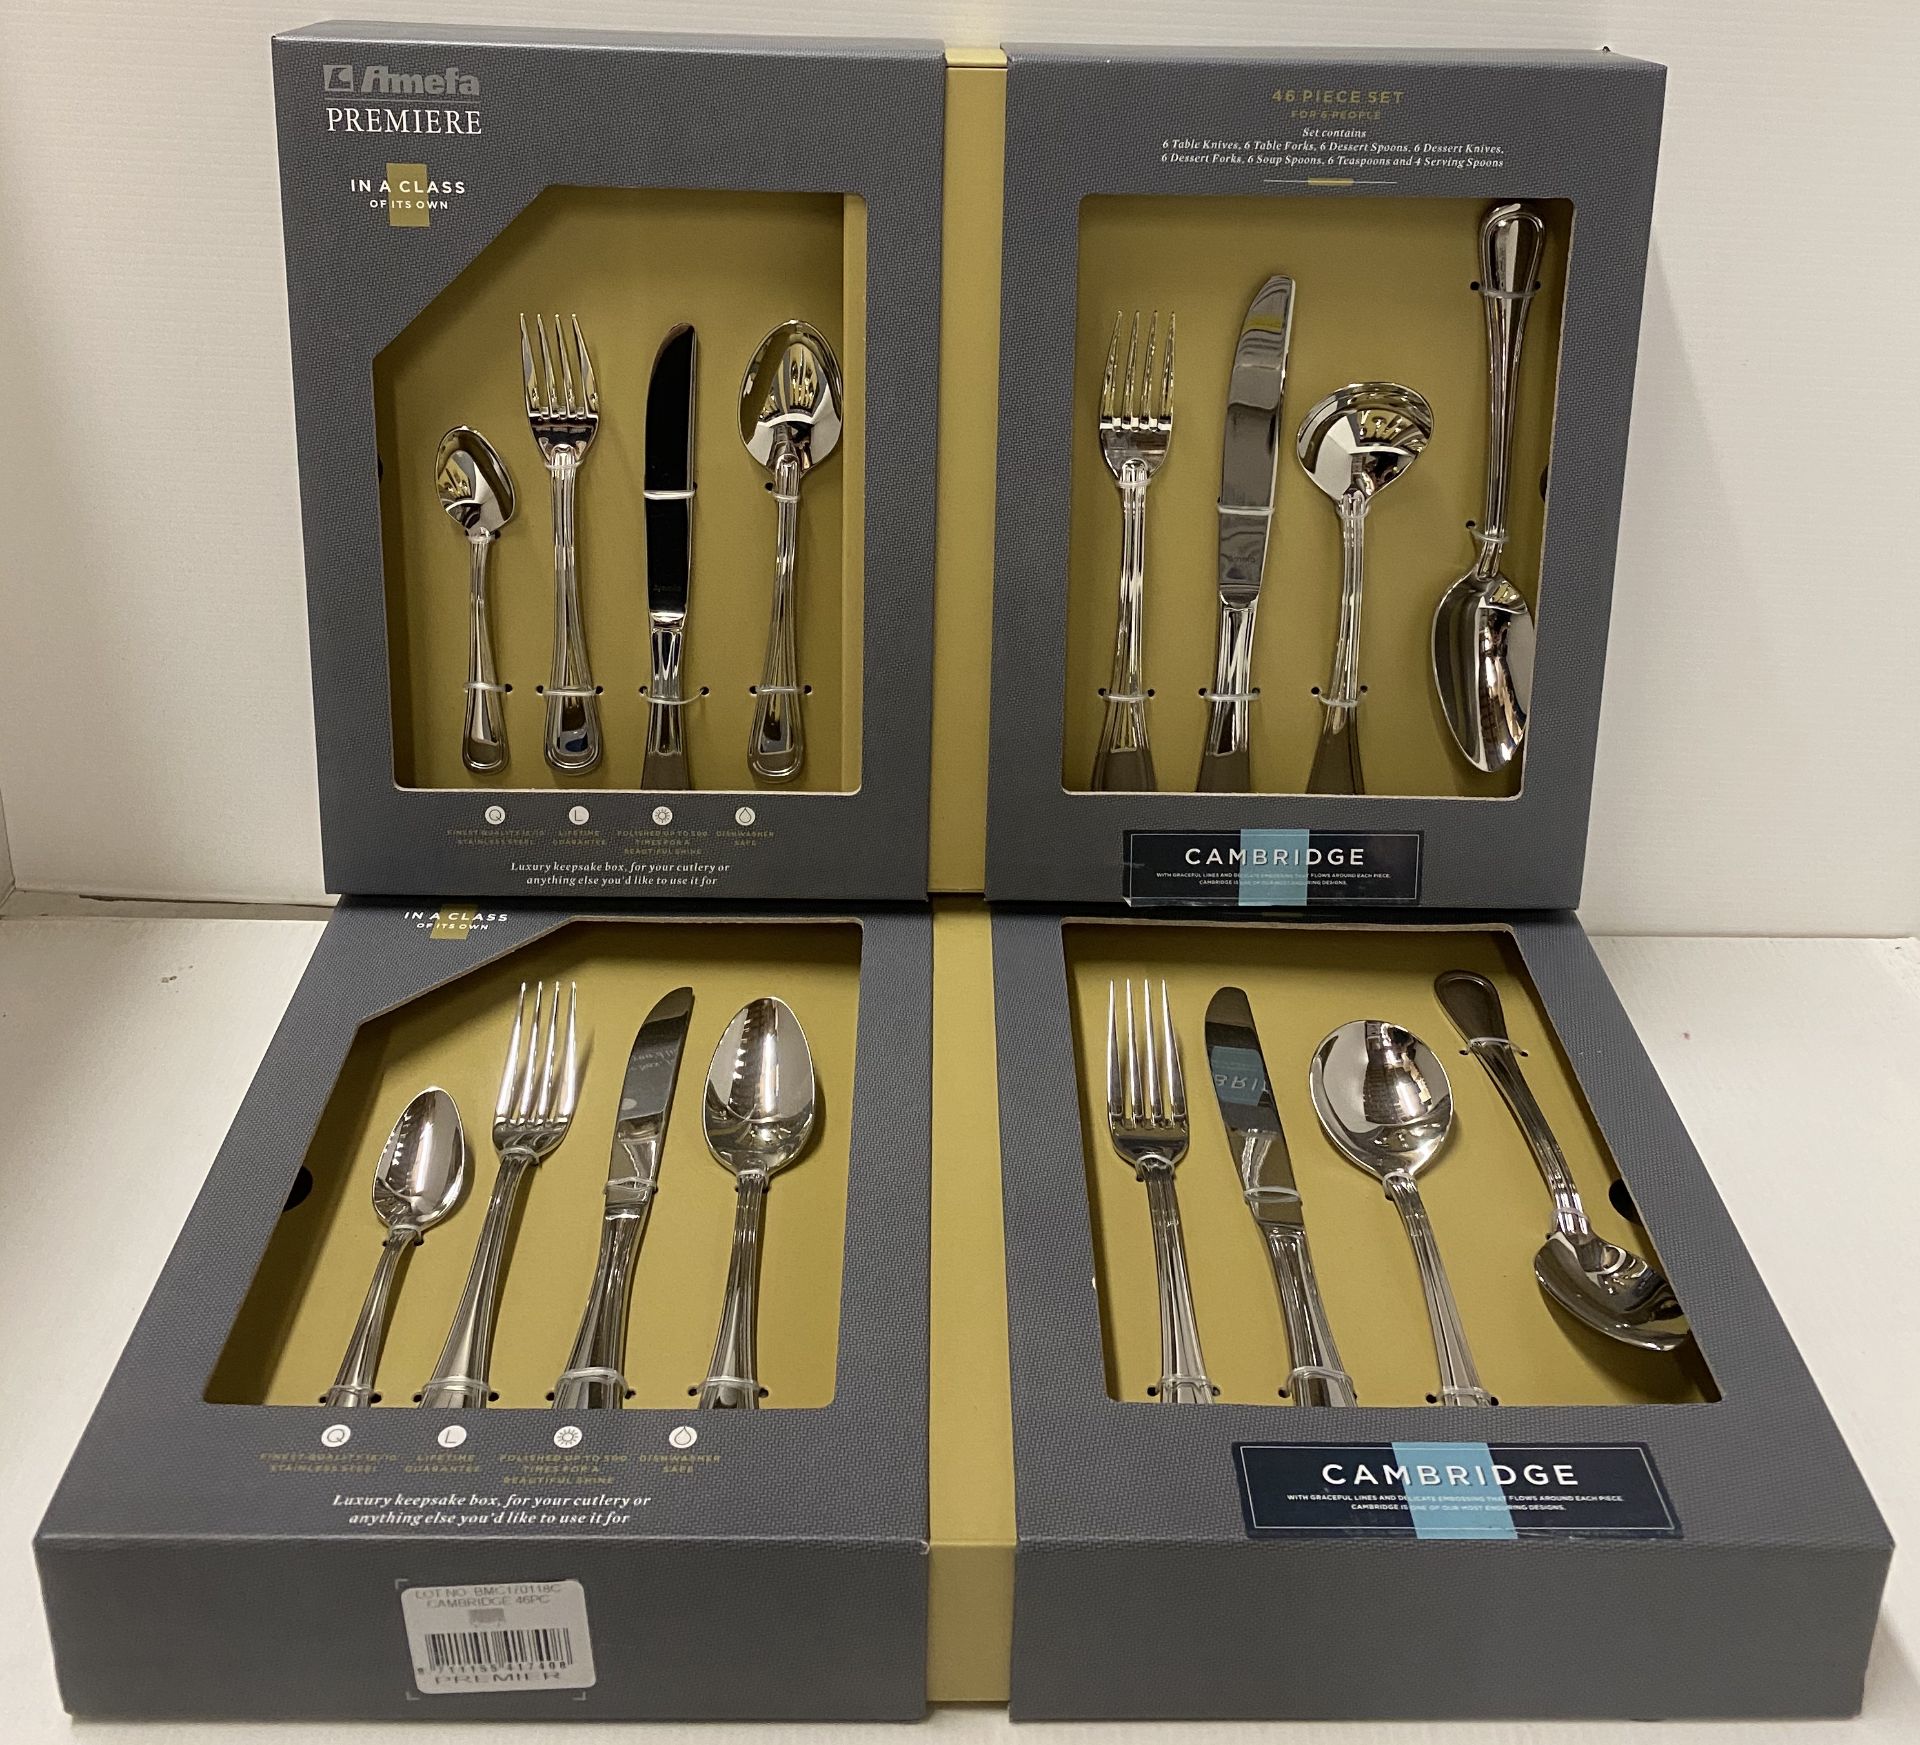 2 x Amefa Premier Cambridge 46 piece cutlery sets RRP £137.